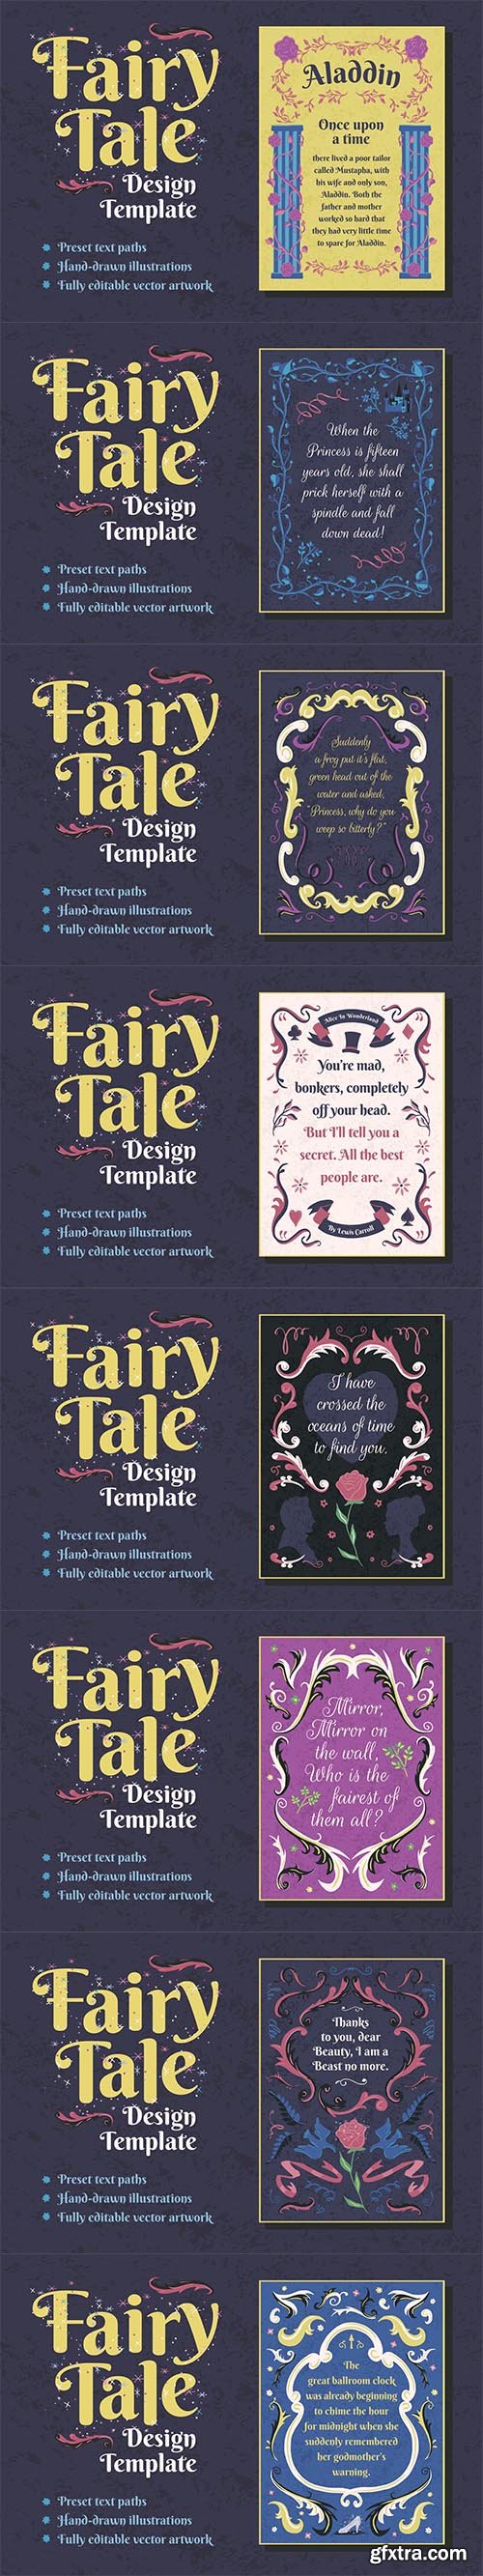 Fairy Tale Frame Design Templates